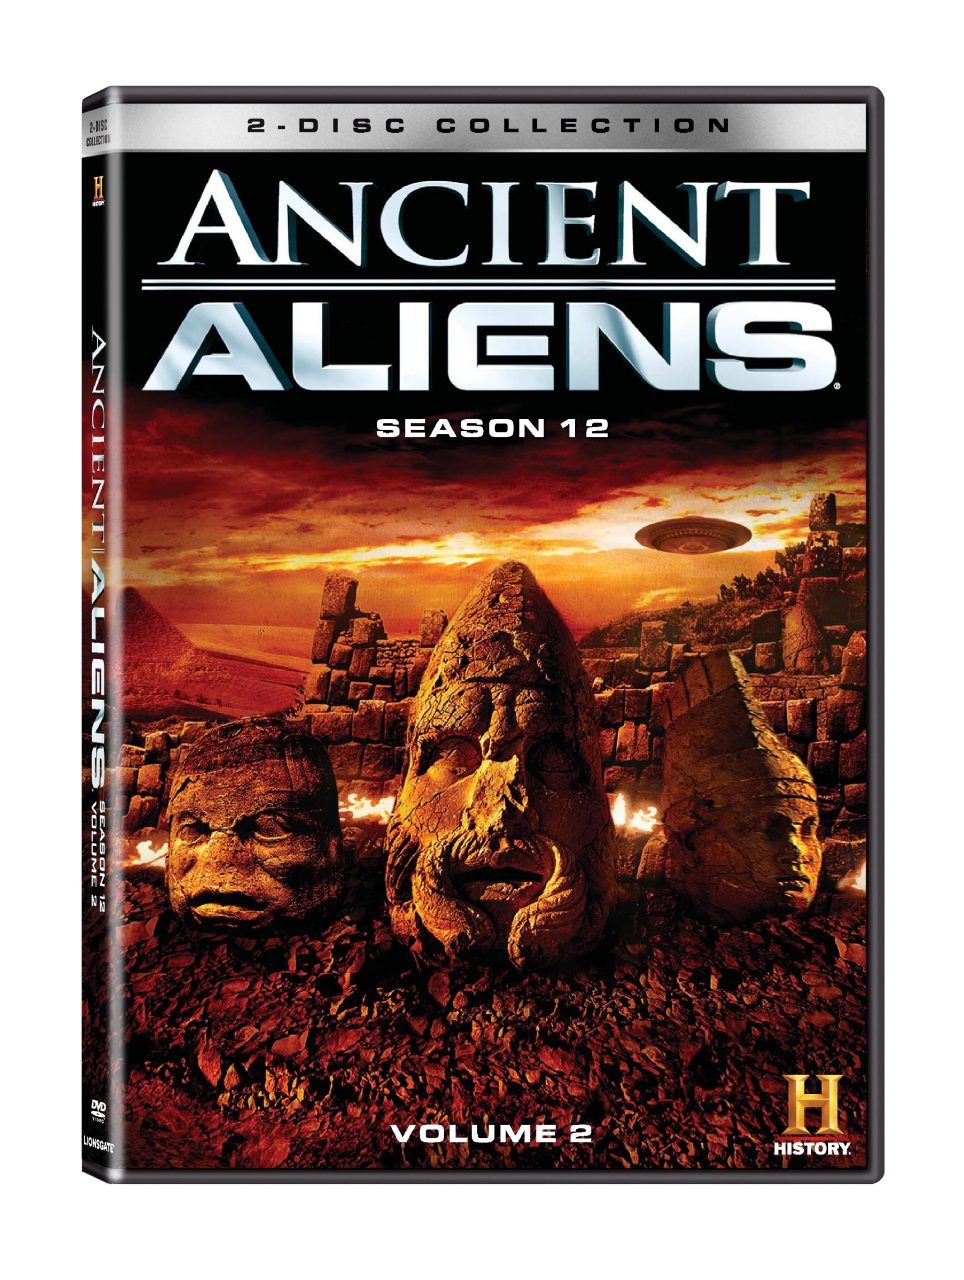 Ancient Aliens: Season 12, Volume 2 DVD cover (Lionisgate Home Entertainment)